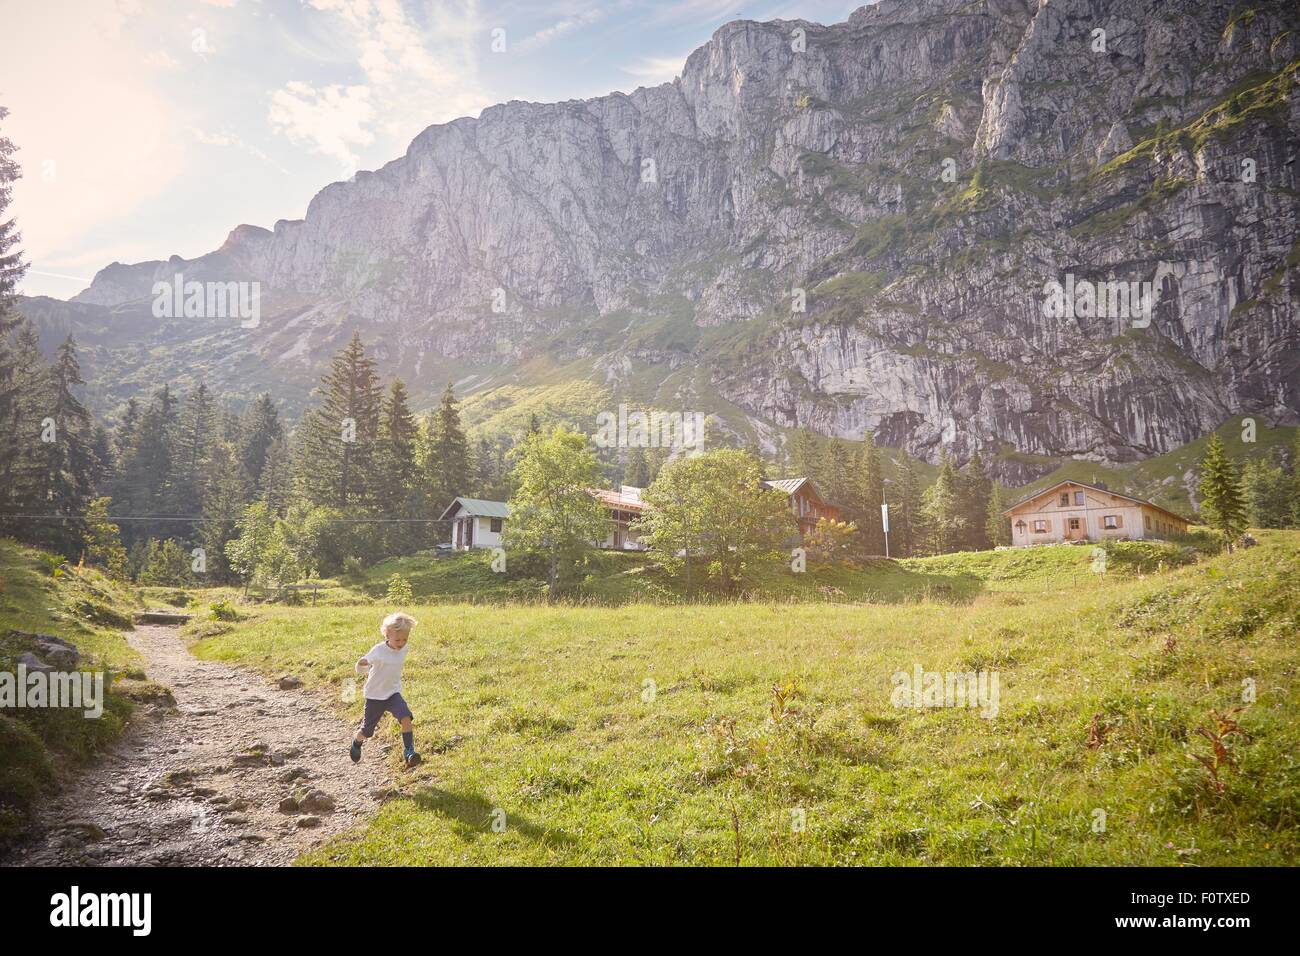 Boy running in rural setting, Benediktbeuern, Bavaria, Germany Stock Photo